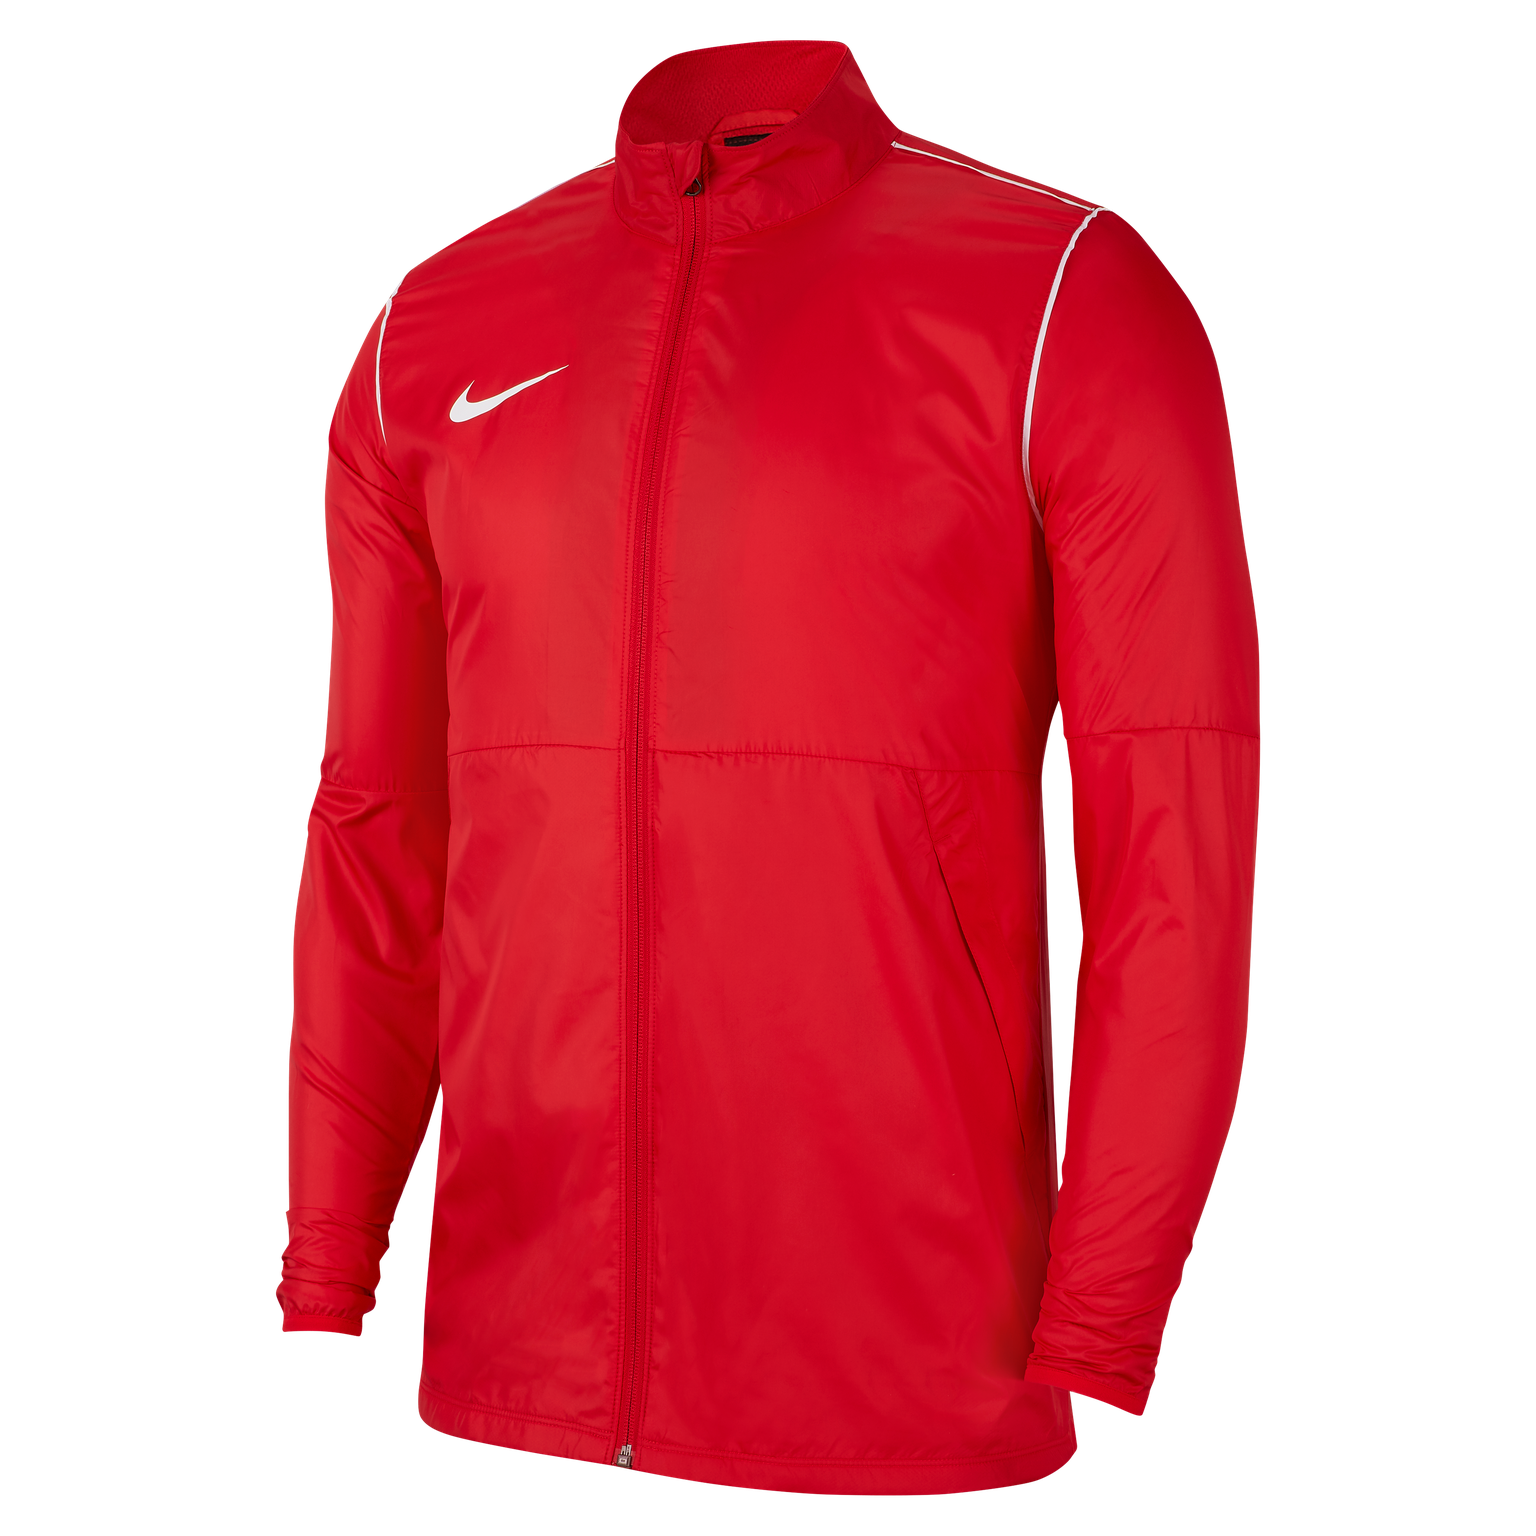 Nike Park 20 Repel Rain Jacket in University Red/White/White